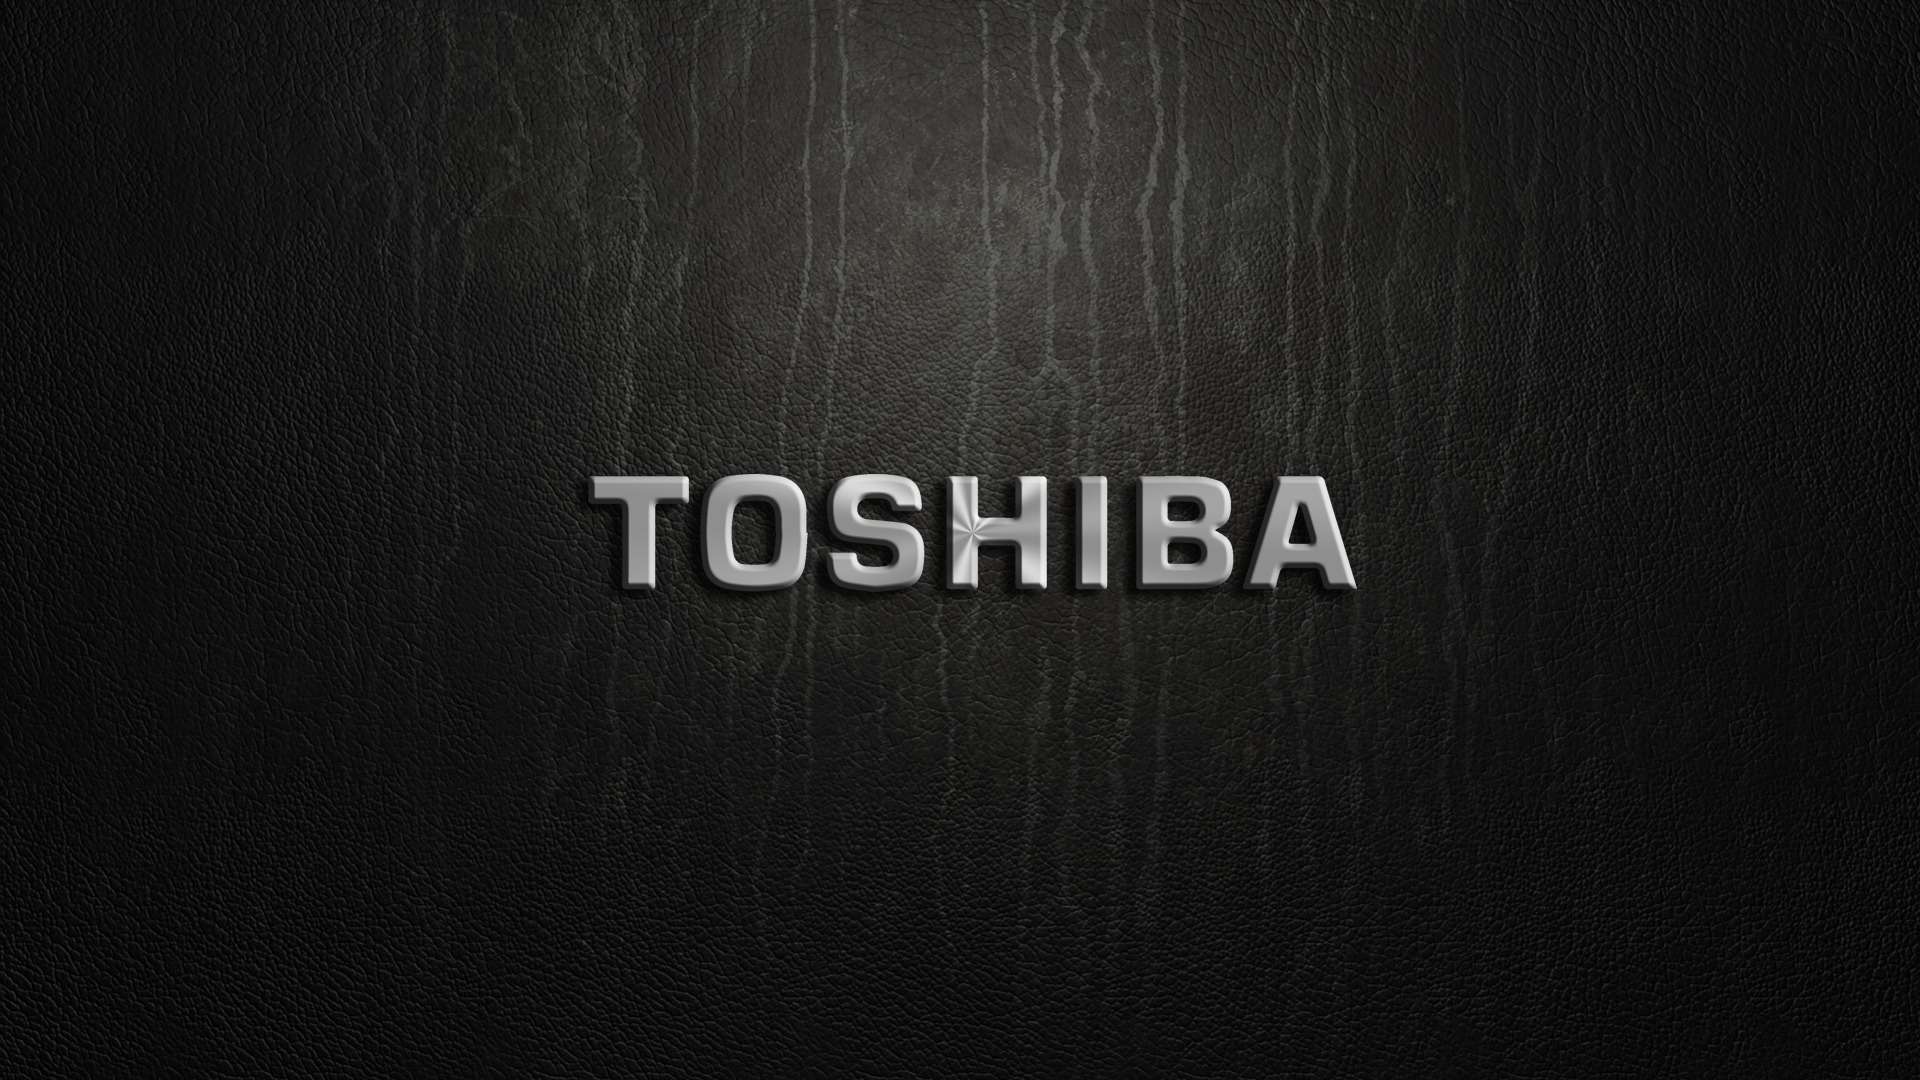 1920x1080 Toshiba Wallpaper Hd